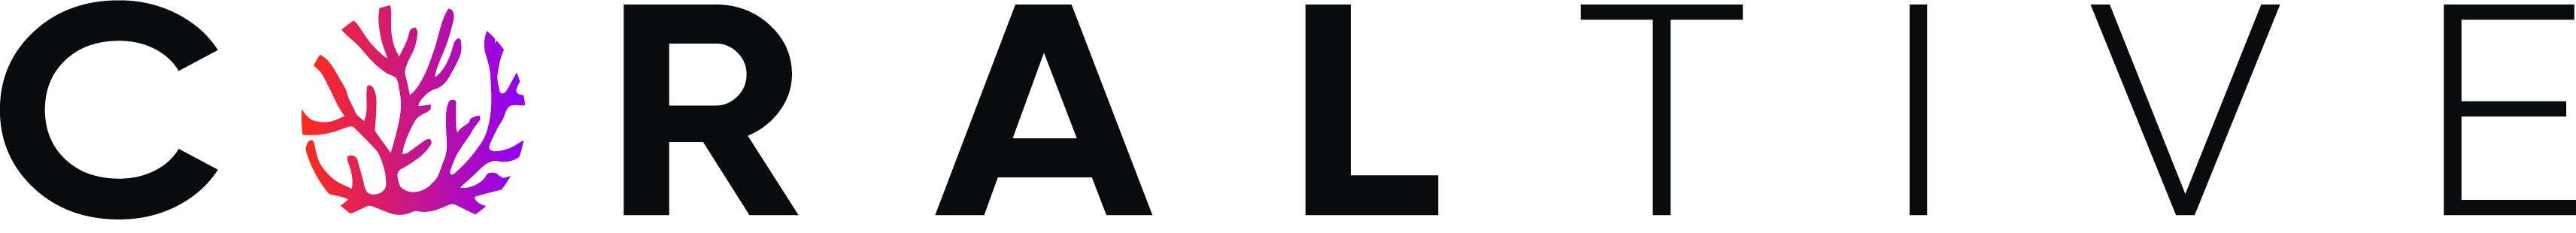 Coraltive ID Logo